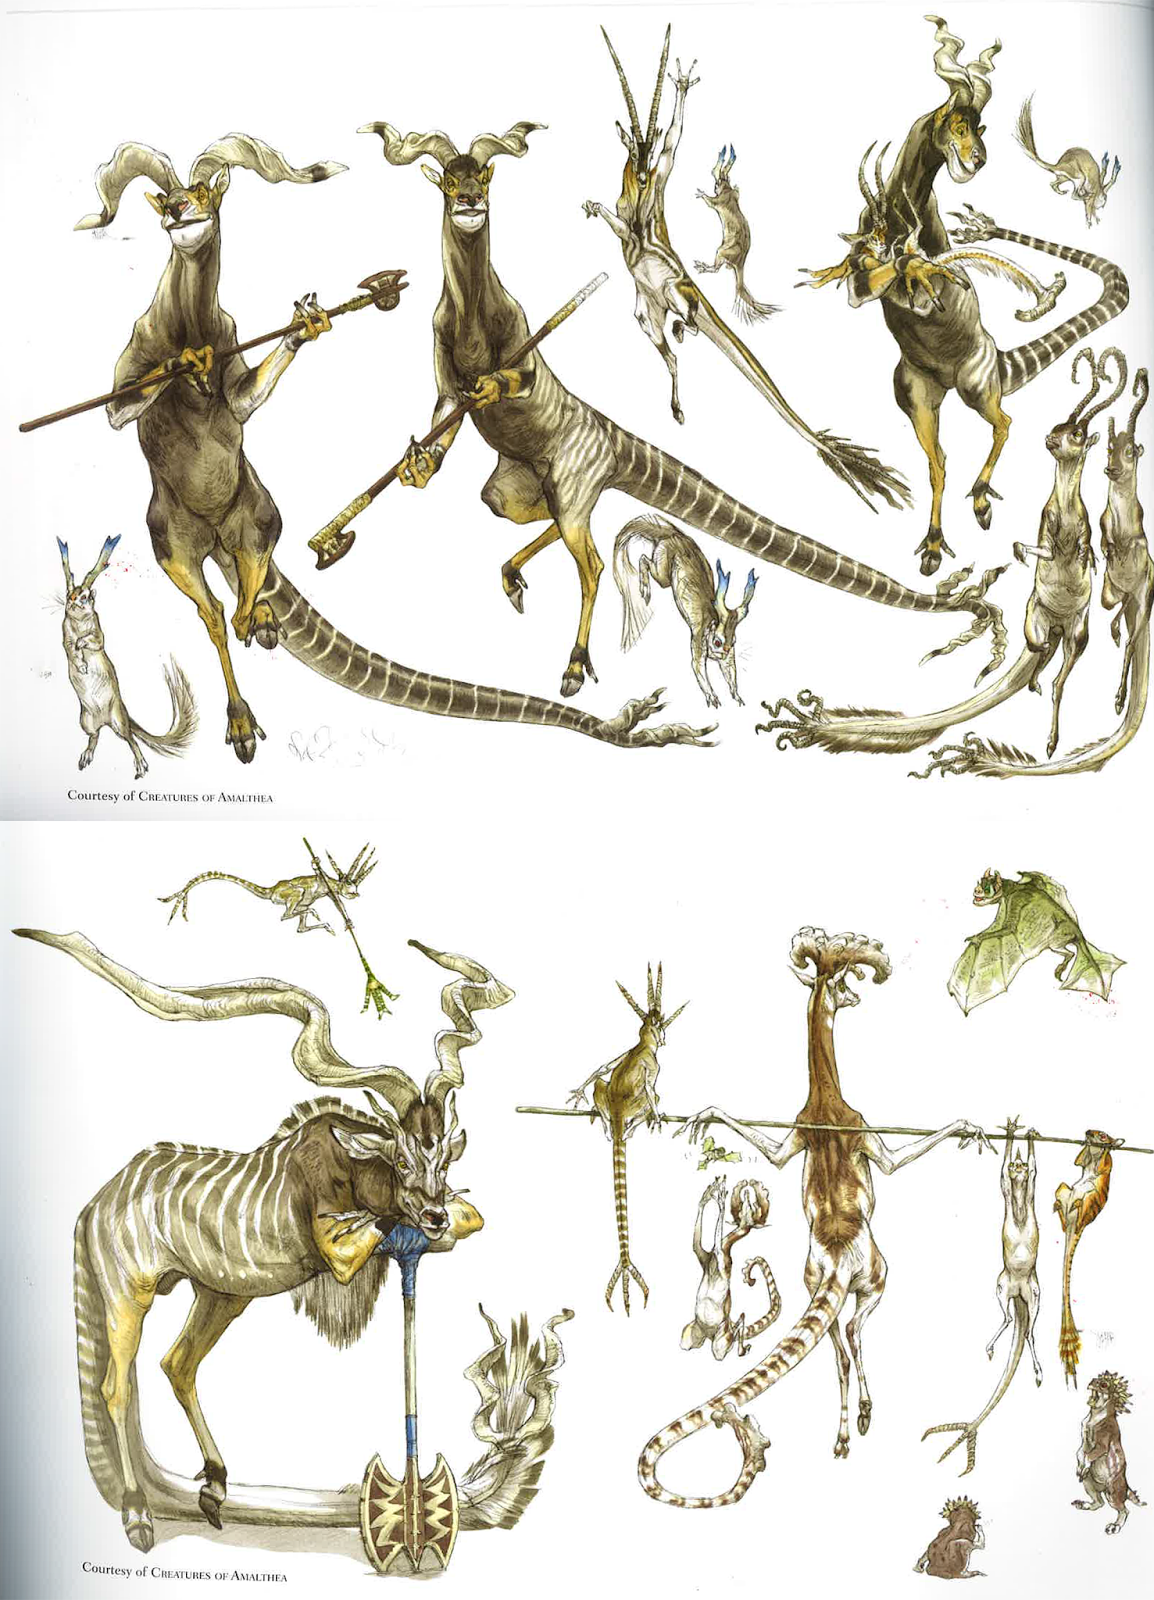 Creatures of sonaria kaiju animals. Principles of creature Design. DORAGONIX creatures of sonaria. Creatures of sonaria Kendyll. Creatures of sonria all creatures.